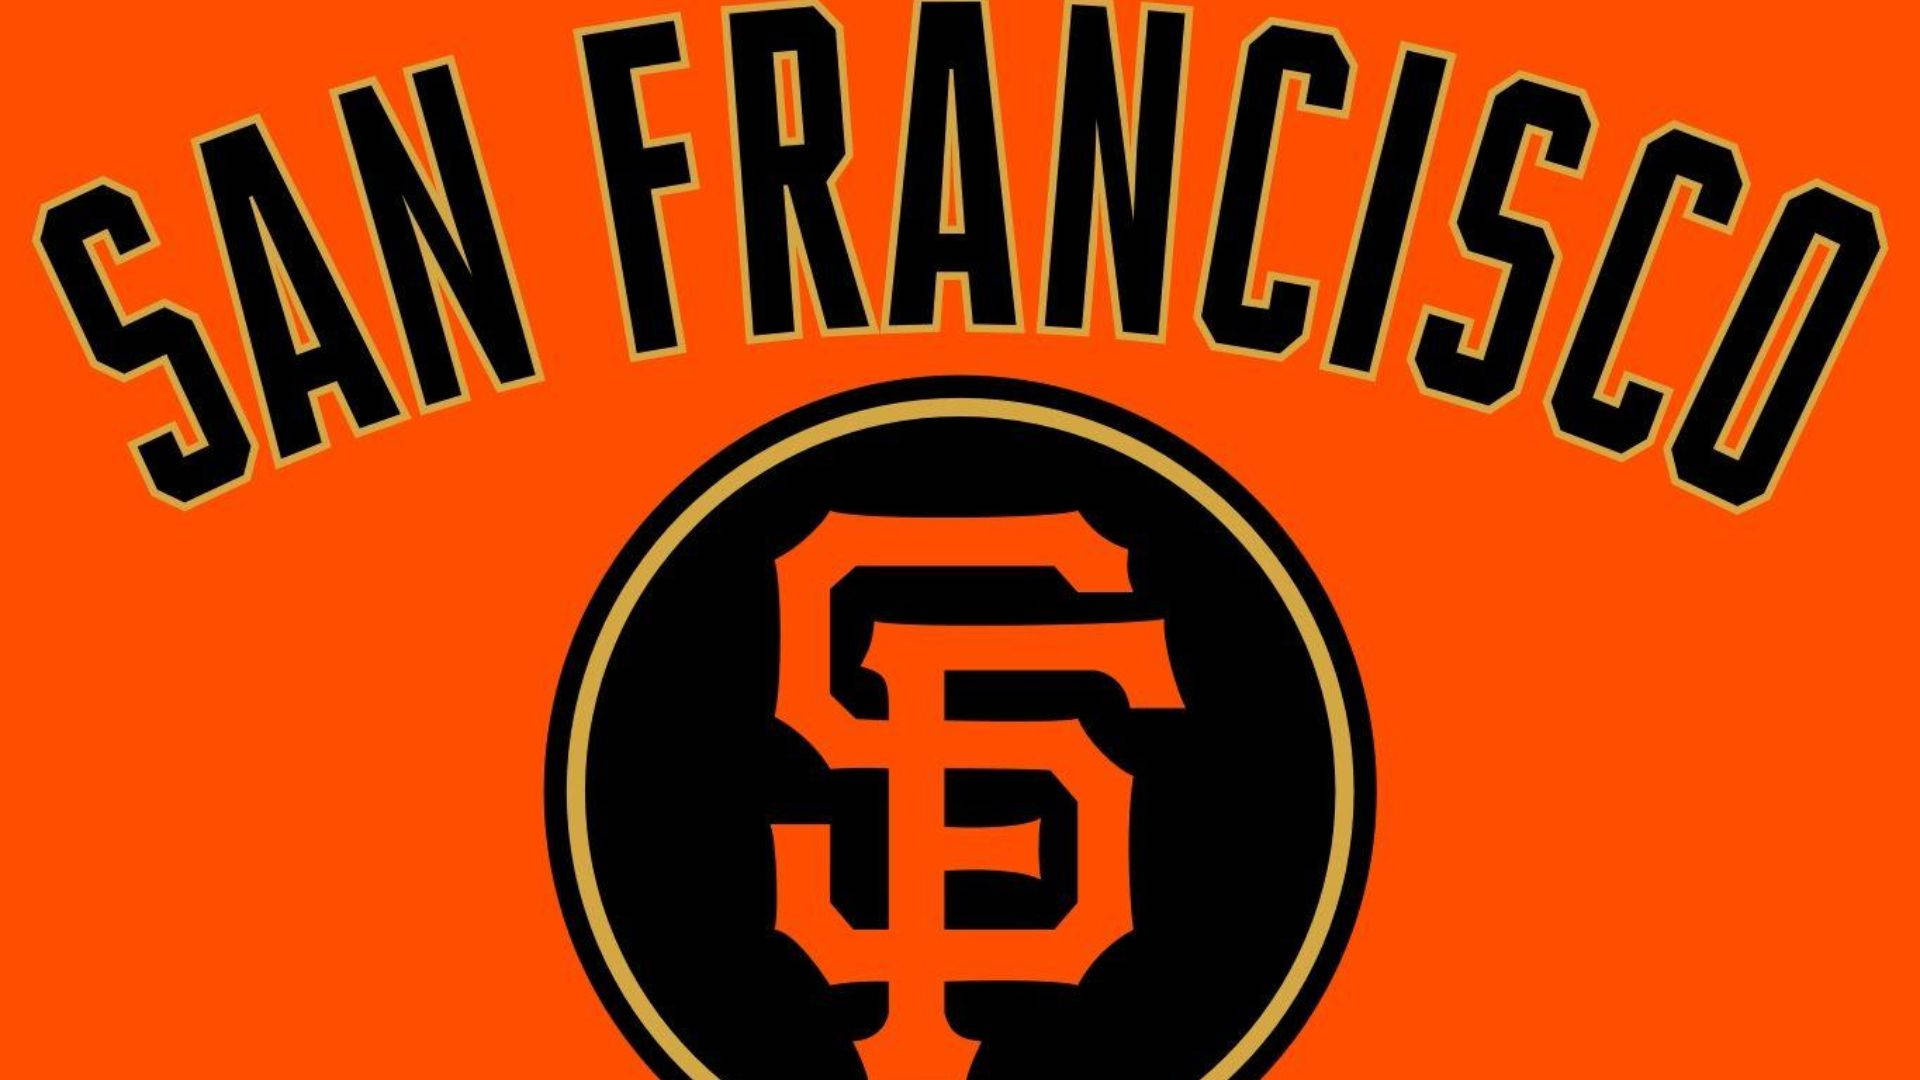 San Francisco Giants On Orange Backdrop Background